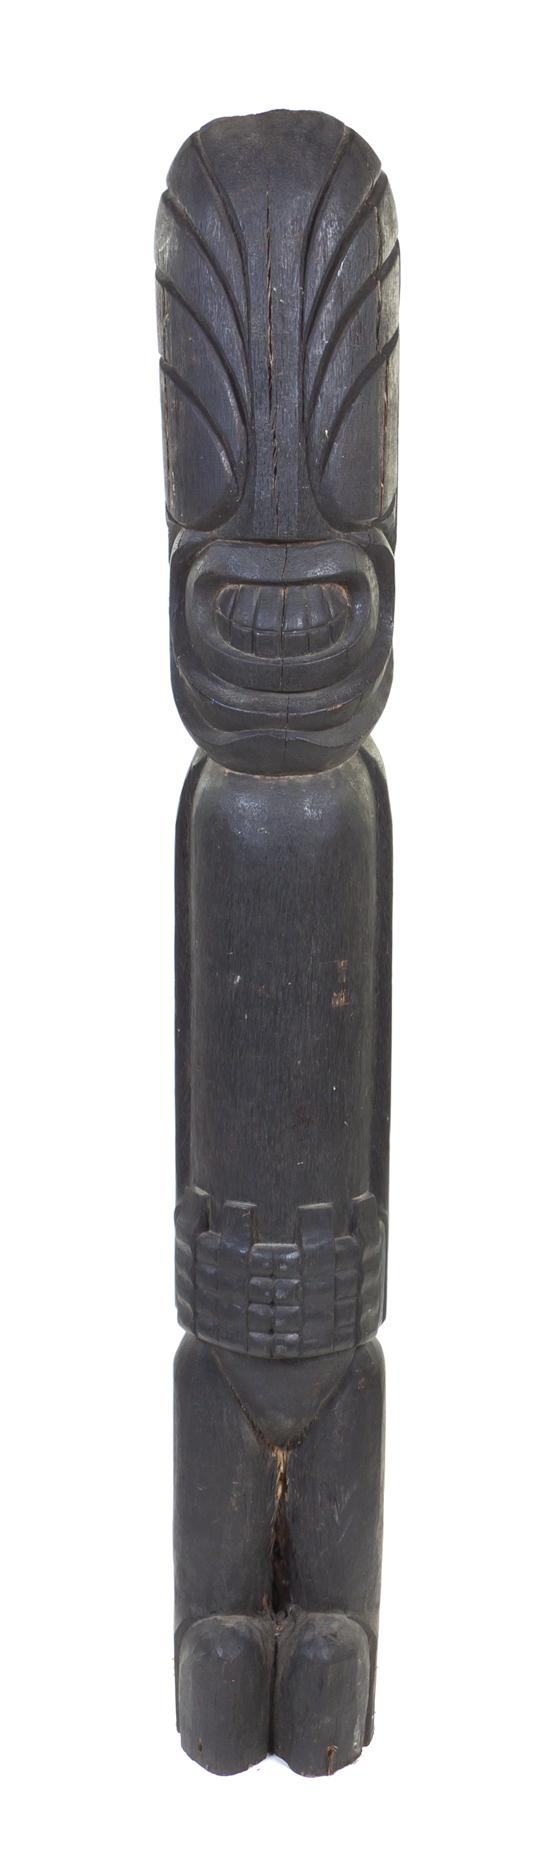 A Carved Wood Tiki Totem depicting